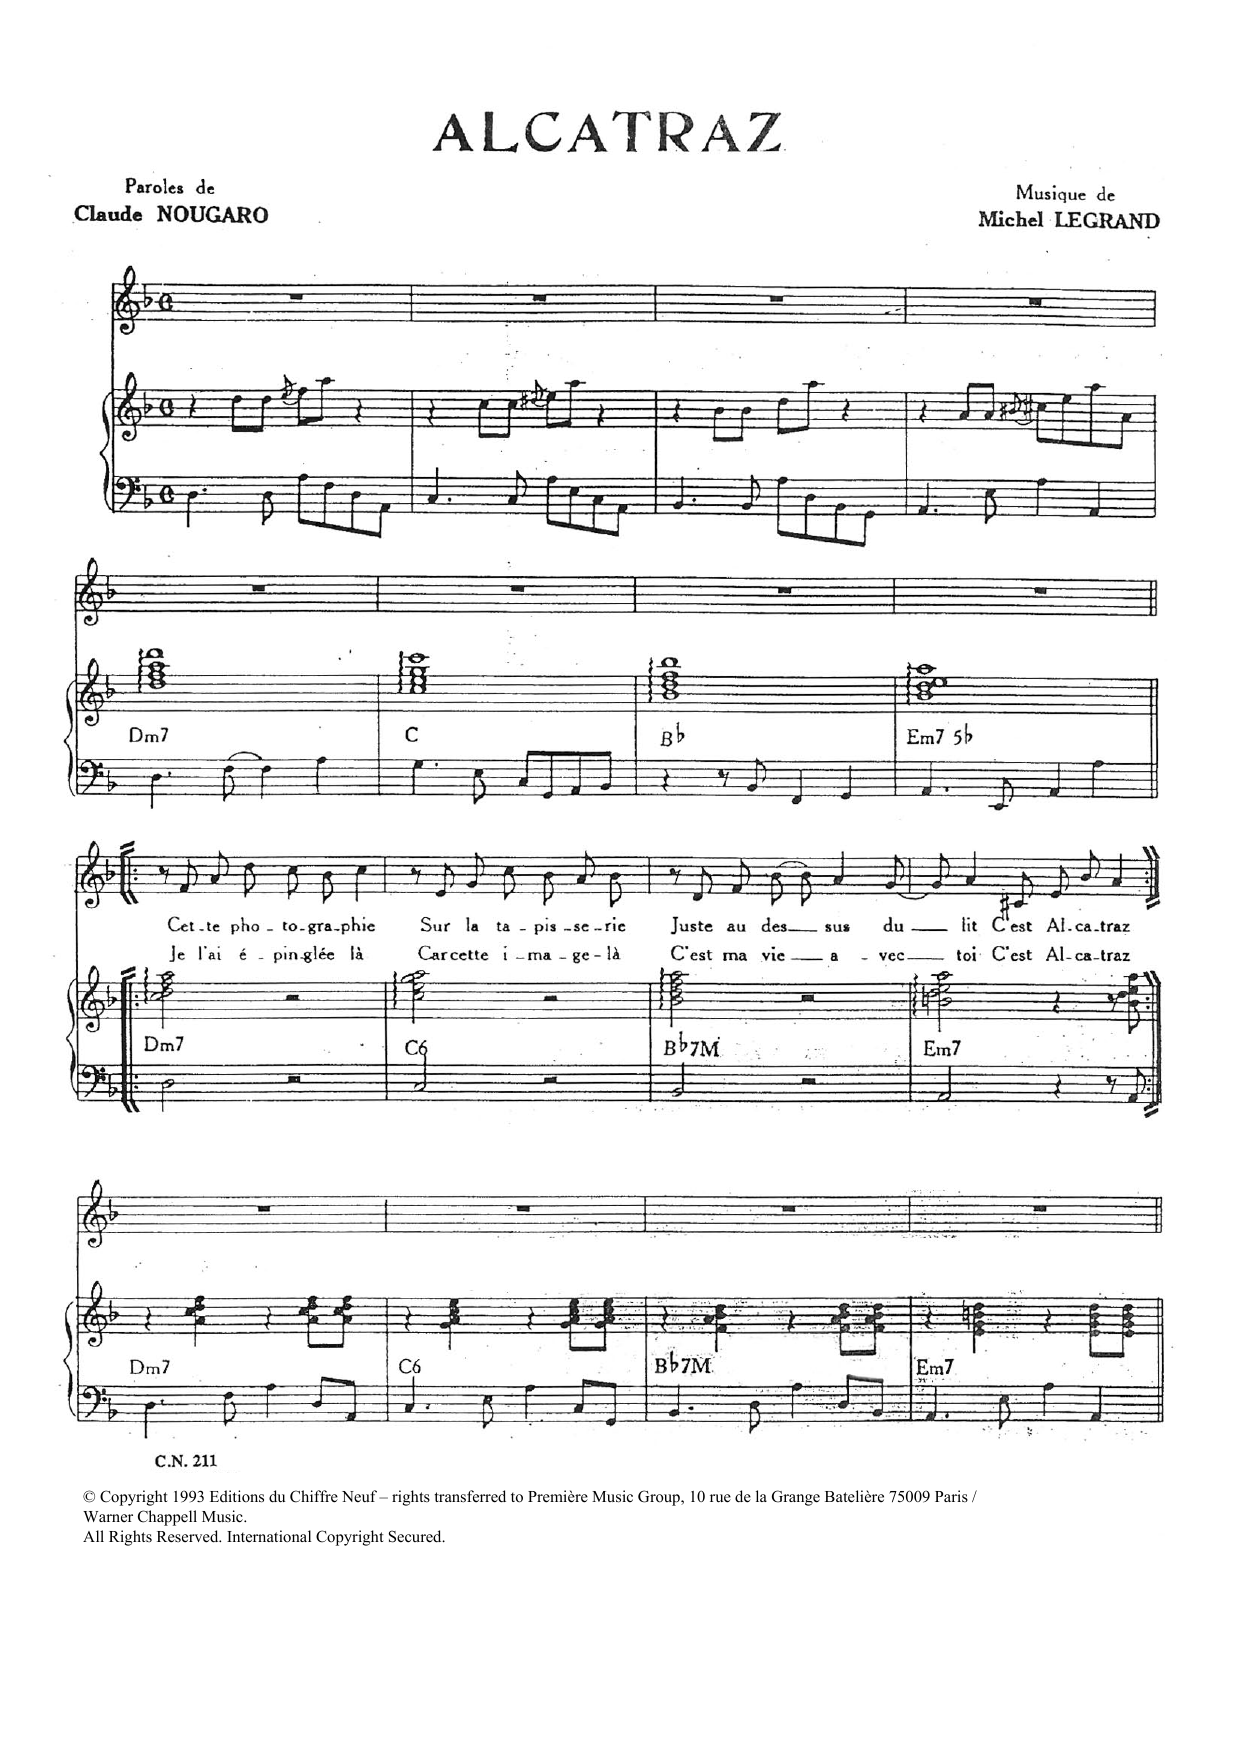 Claude Nougaro Alcatraz Sheet Music Notes & Chords for Piano & Vocal - Download or Print PDF